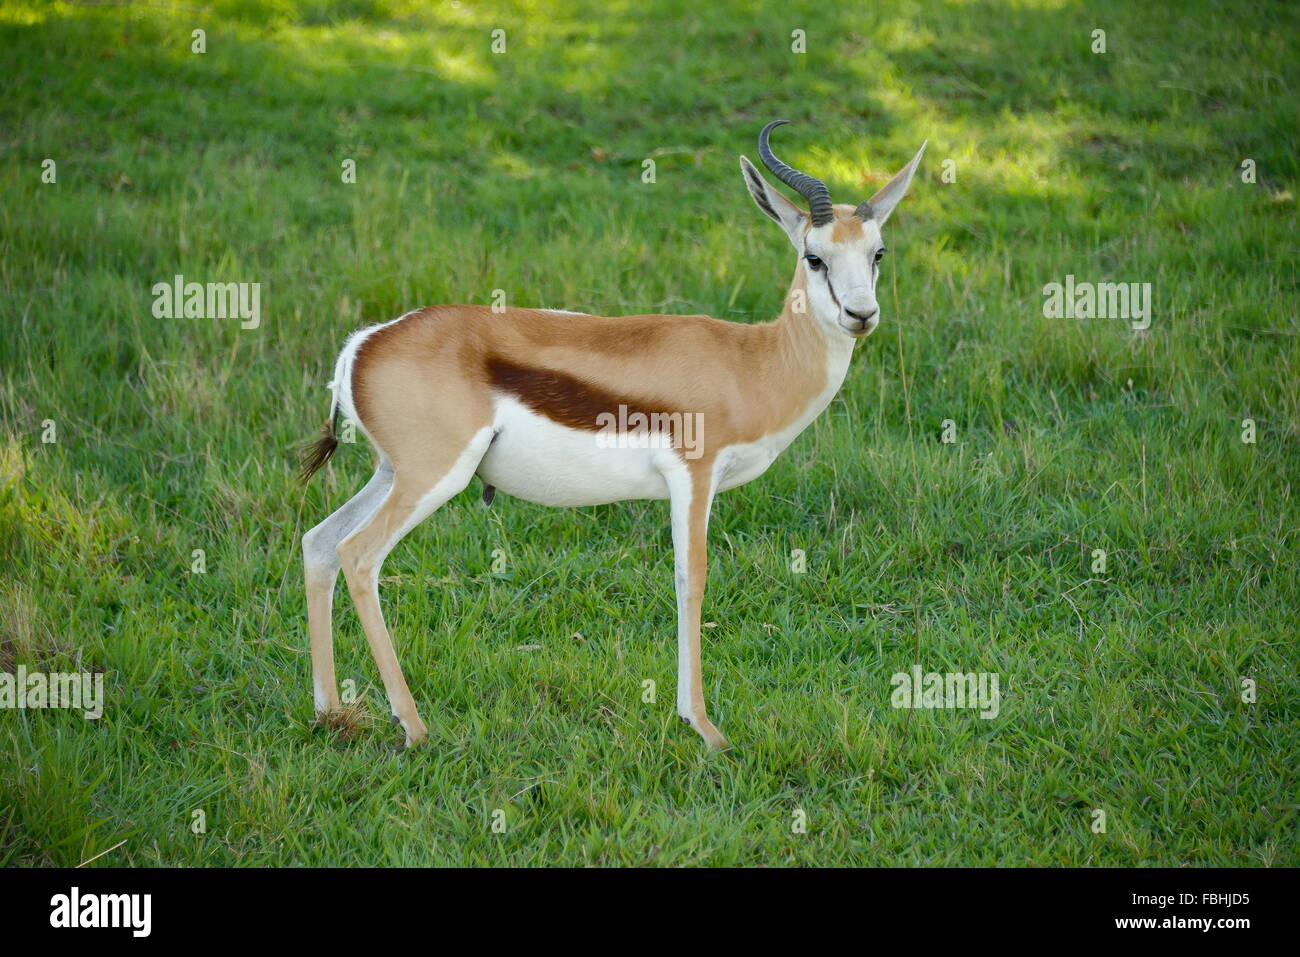 Le springbok, l'antilope Animal World Game Park, Emerald Resort, Vanderbijlpark, Emfuleni Municipalité, Gauteng, Afrique du Sud Banque D'Images